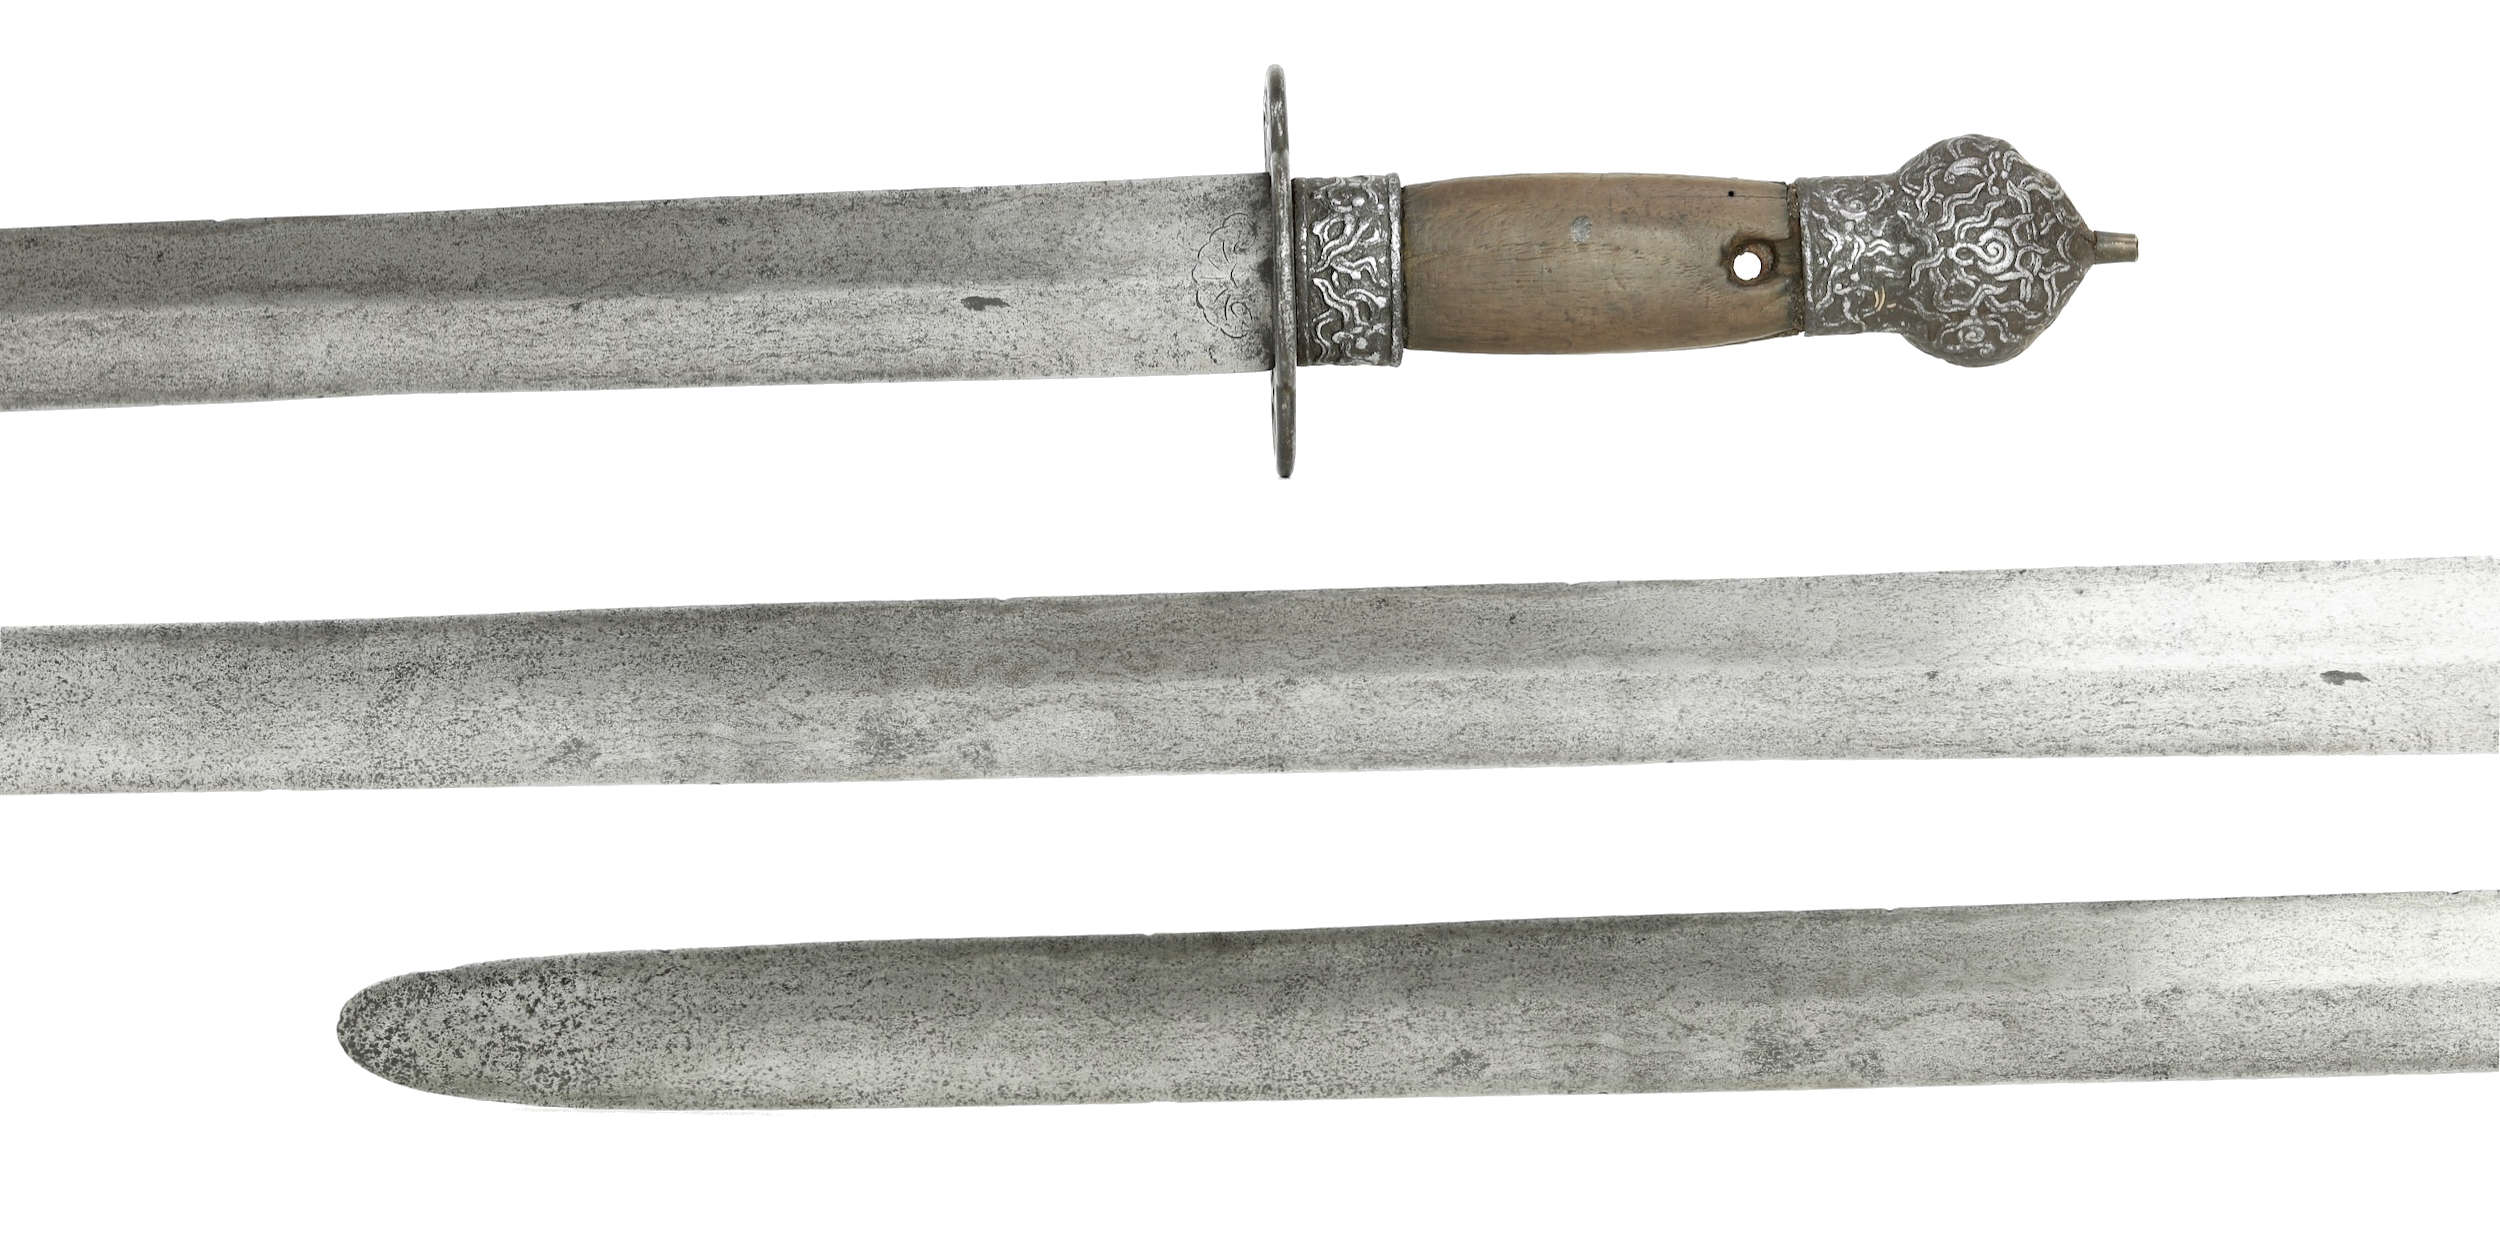 Ming jian with chiseled iron mounts